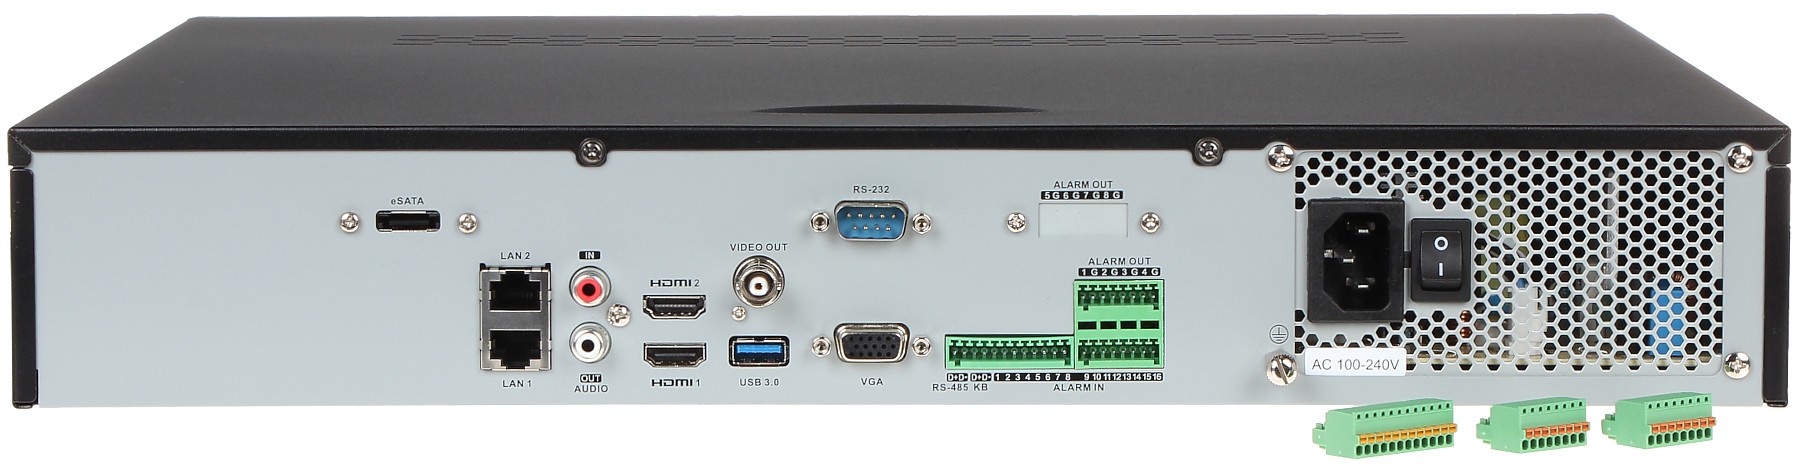 Регистратор 32 канала. DS-7716ni-i4(b). DS-7732nxi-i4. Hikvision DS-7732nxi-i4/s(c). 32-Канальный IP-видеорегистратор Hikvision DS-7732ni-k4/16p.